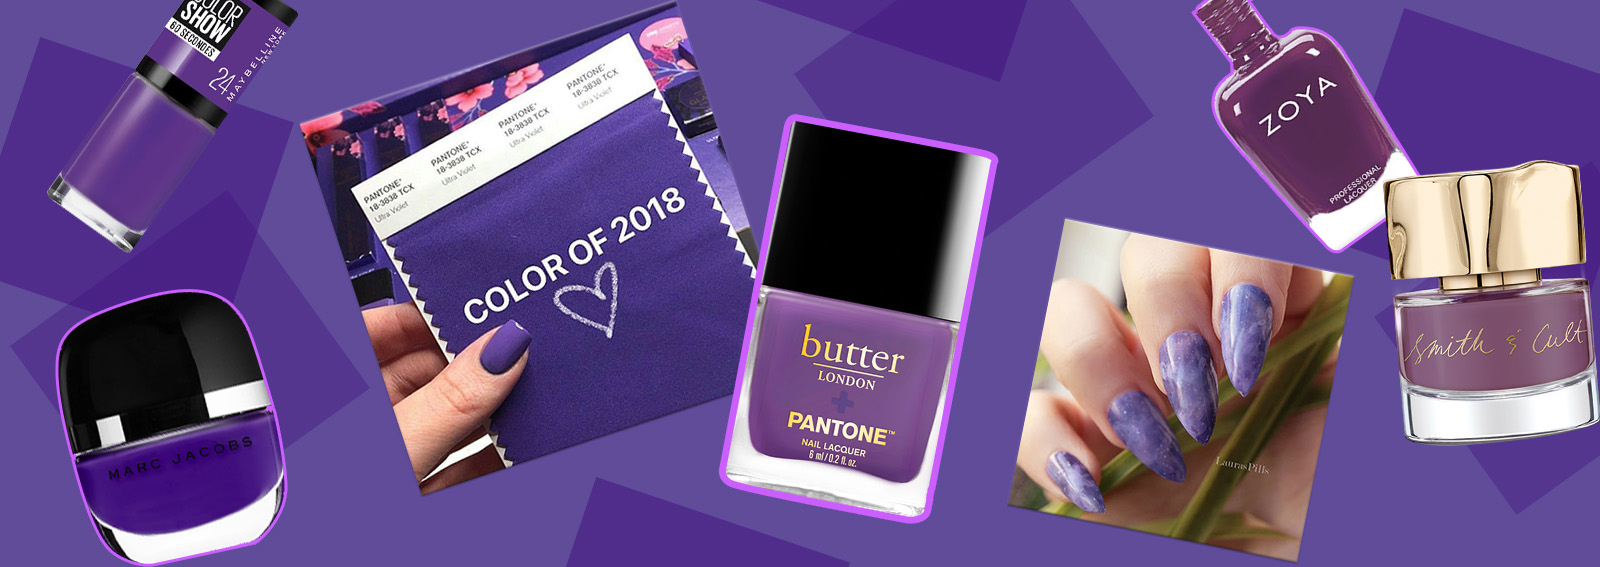 smalti viola ultra violet unghie 2018 collage collage desktop